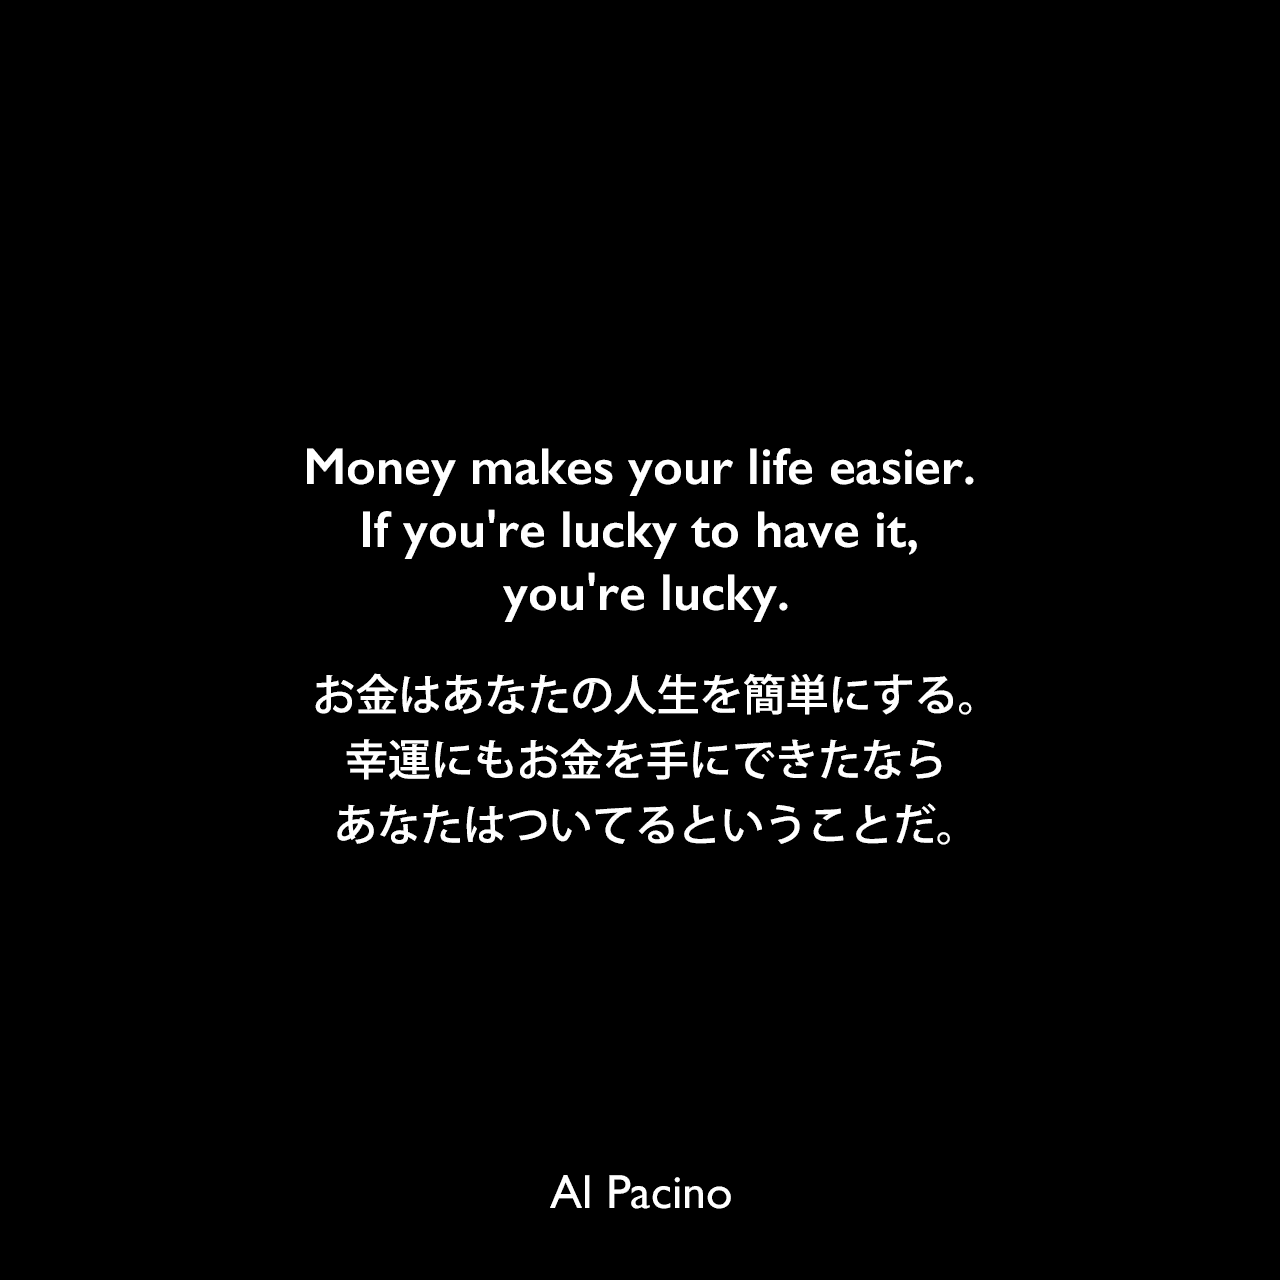 Money makes your life easier. If you're lucky to have it, you're lucky.お金はあなたの人生を簡単にする。幸運にもお金を手にできたなら、あなたはついてるということだ。Al Pacino